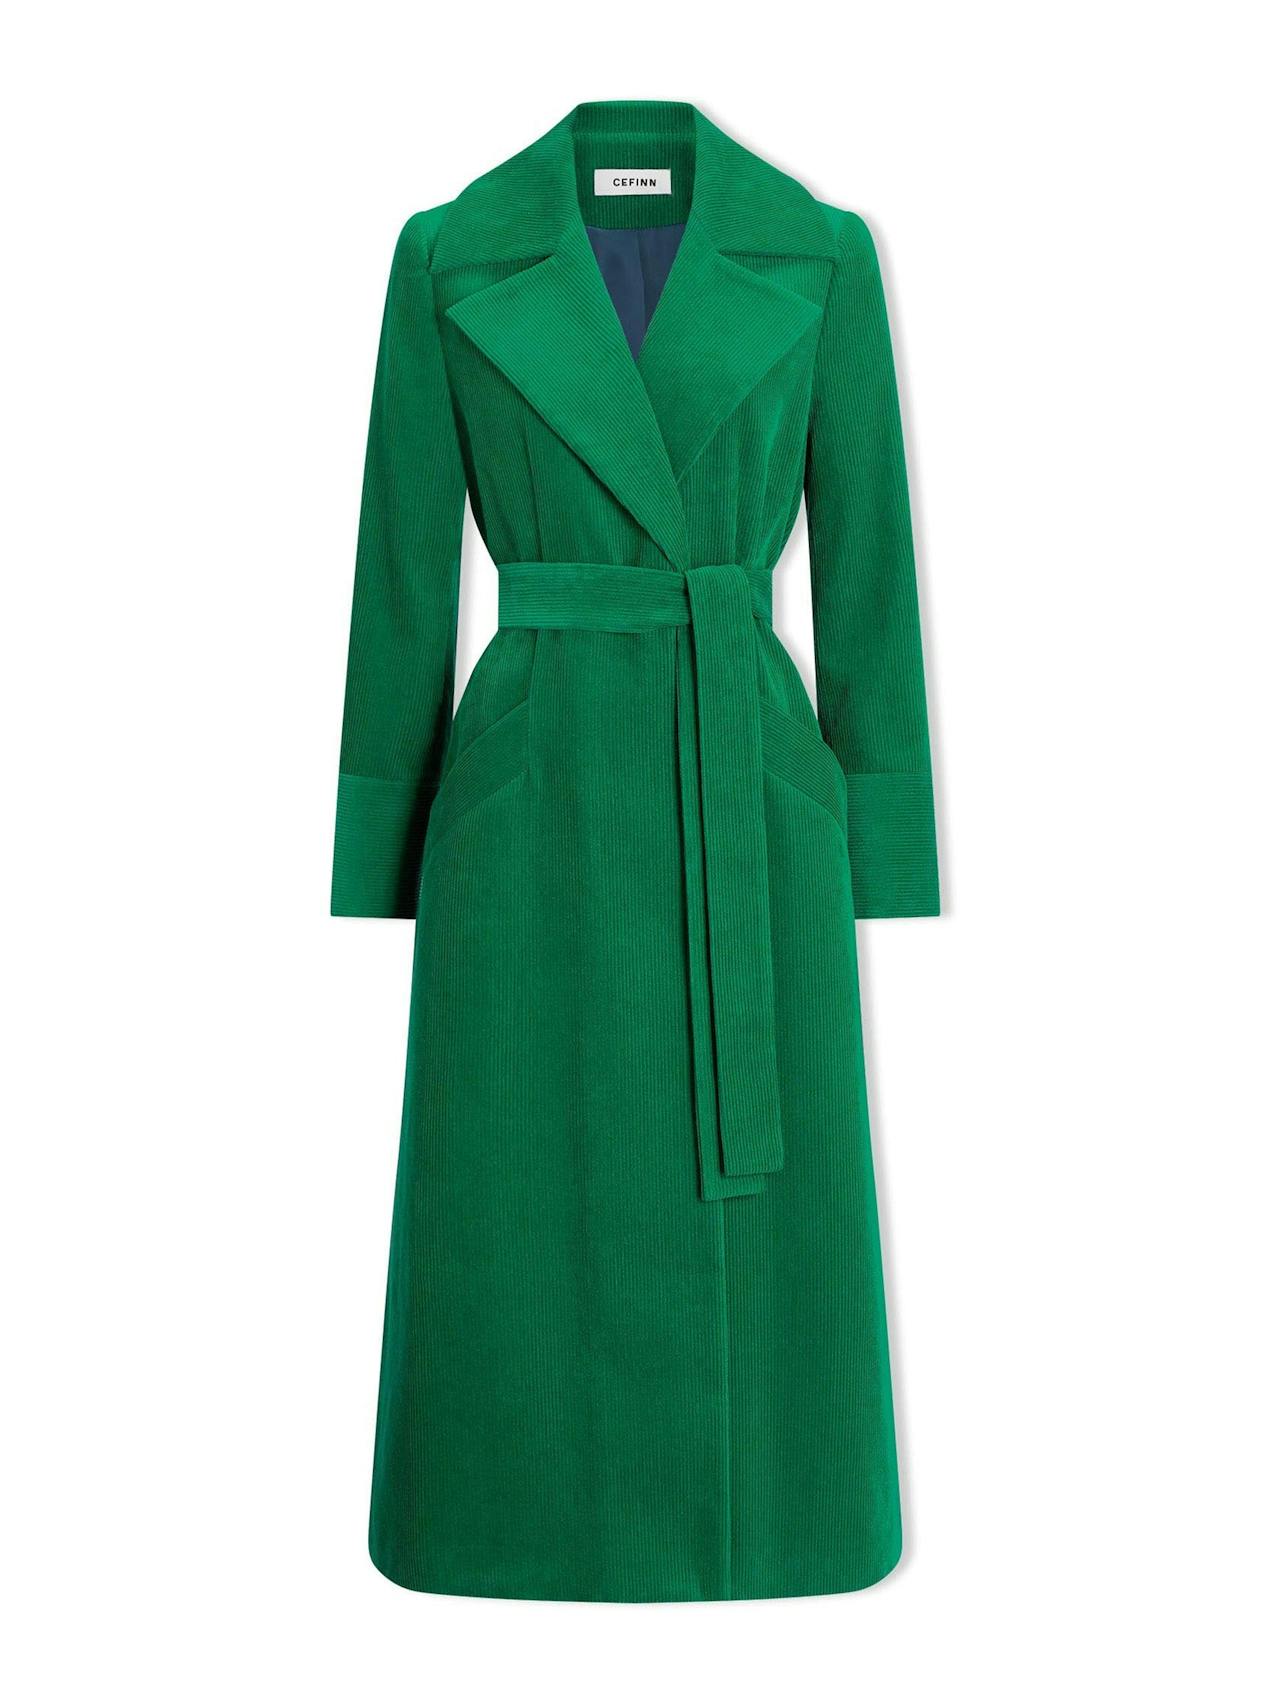 Emerald green corduroy Roxanne coat